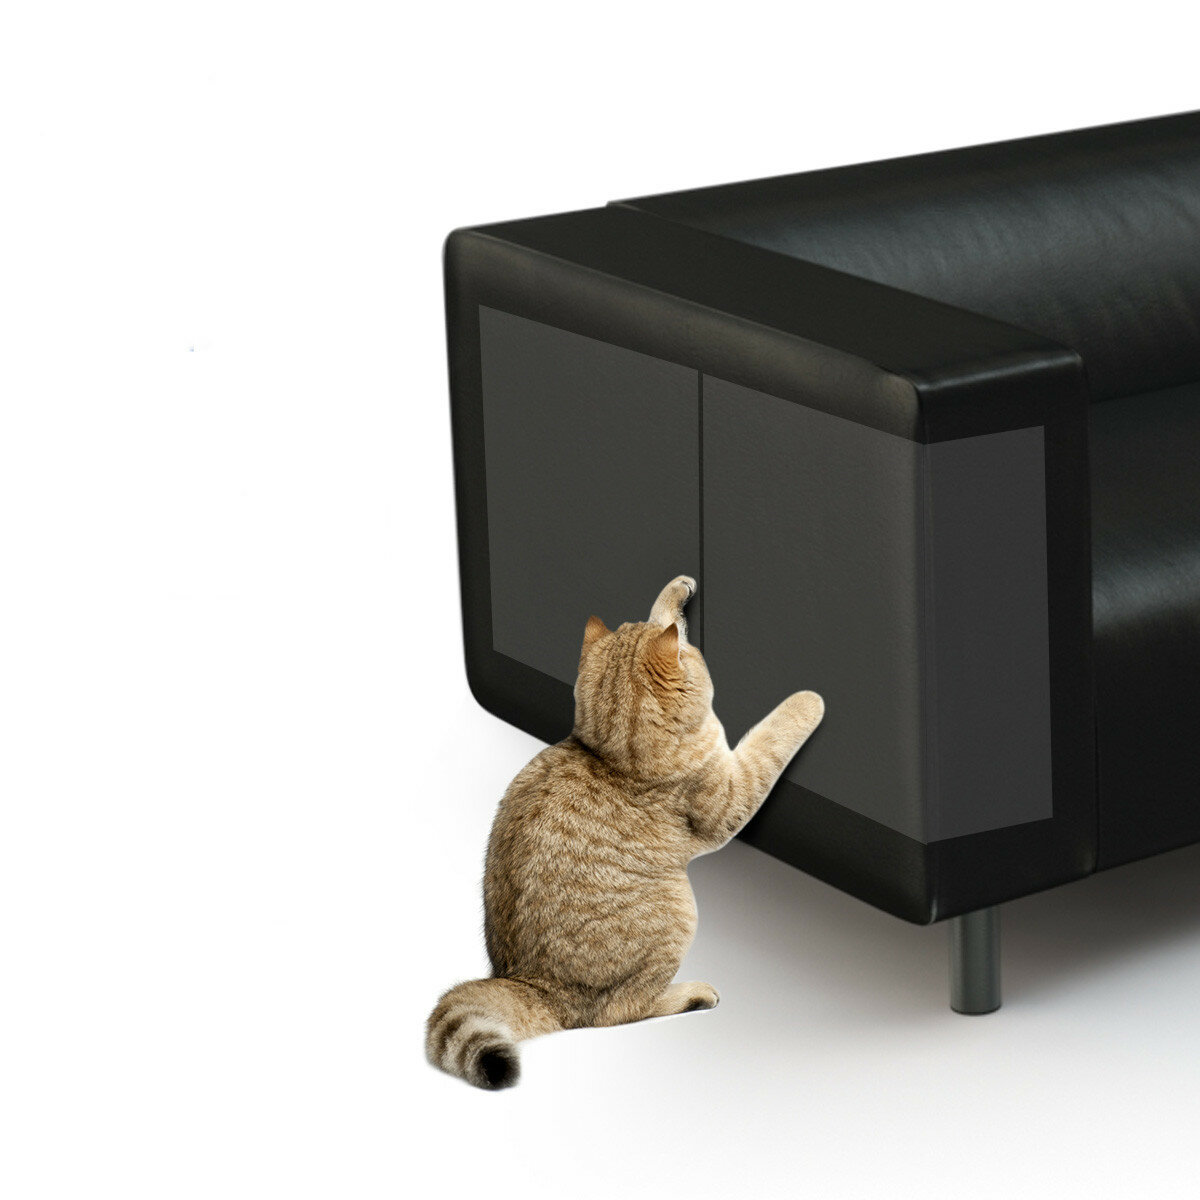 BKVESHI Furniture Protectors from Cats, 6Pcs Cat Scratch Deterrent Tape Anti-Scratch Cat Double Sided Anti Scratch Tape